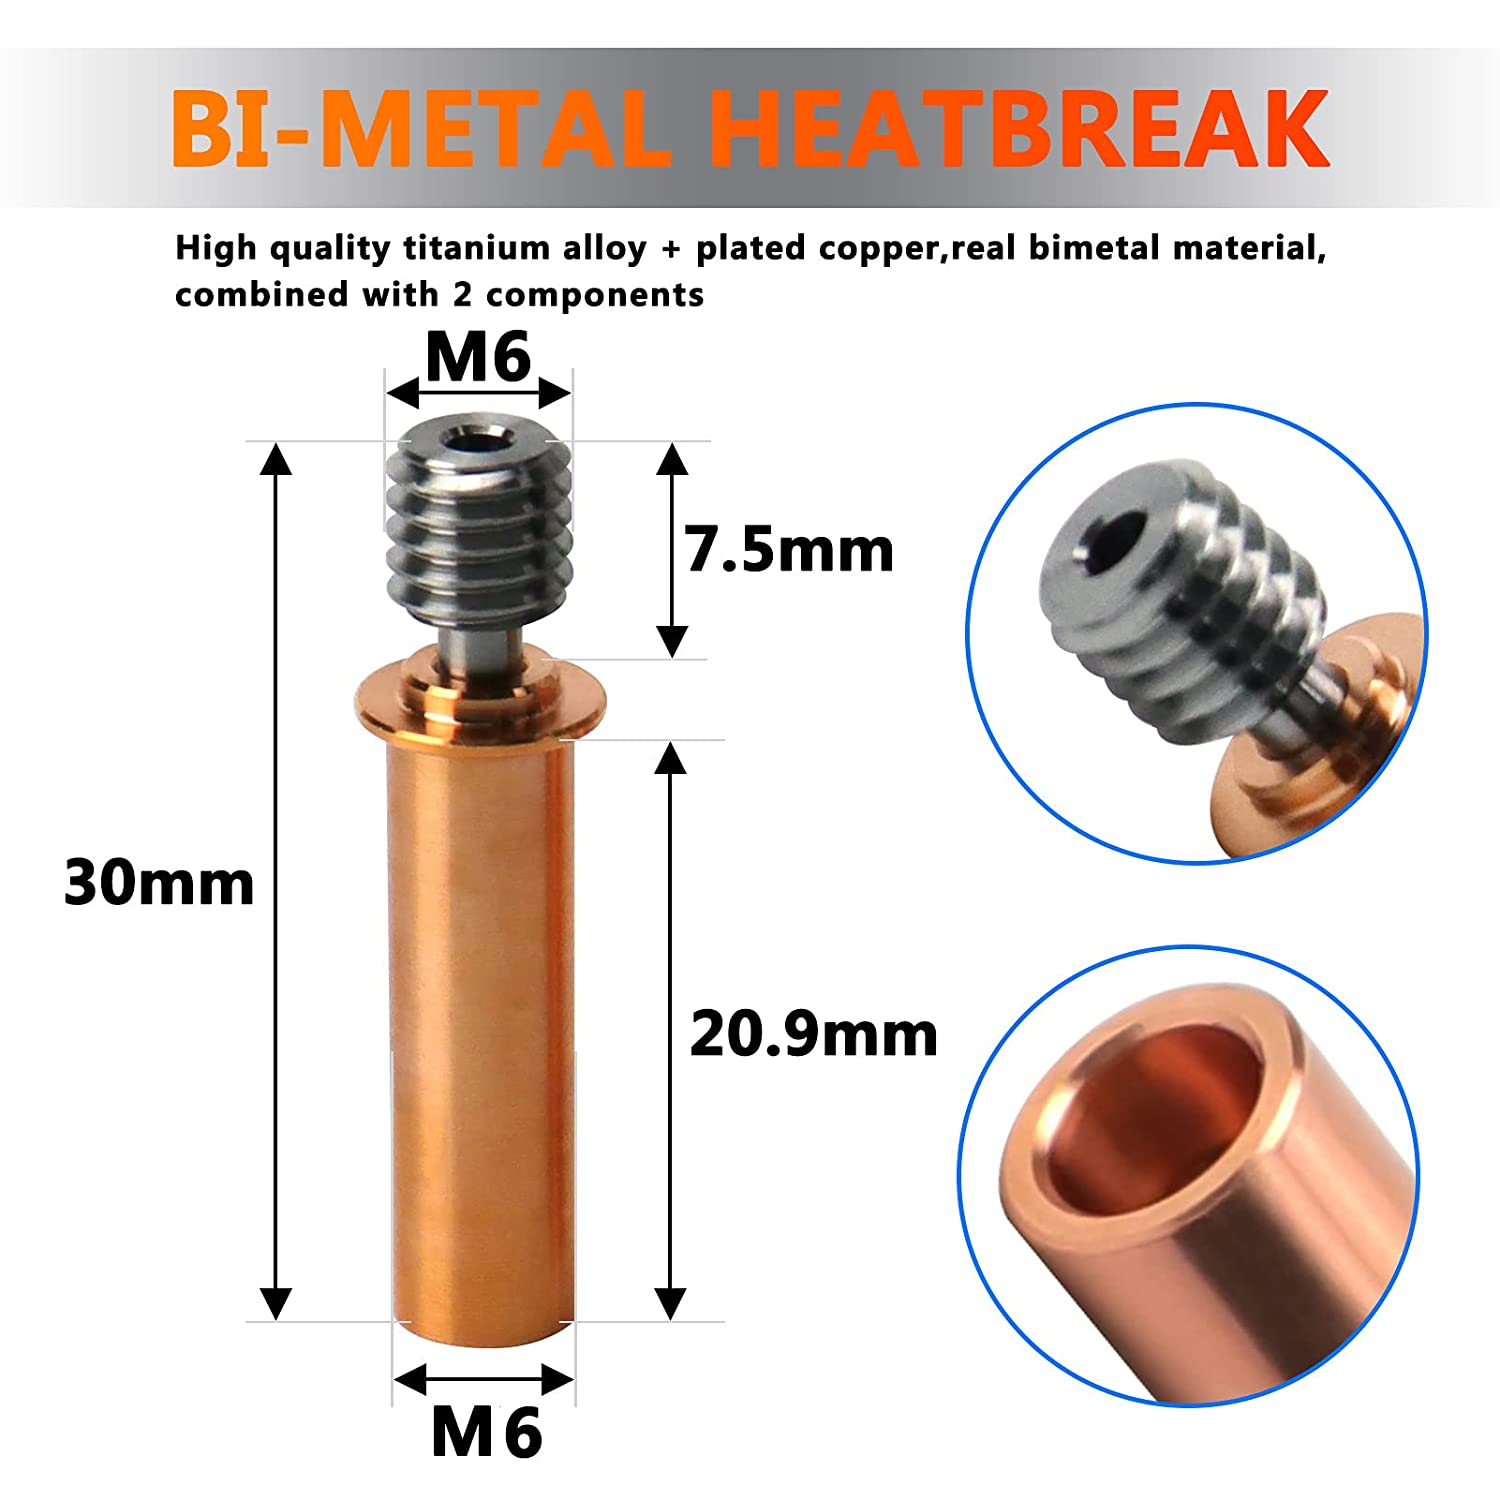 CR-6 SE All Metal Bimetal Heatbreak Copper Titanium TC4 Throat Upgrade for CR-6 SE/Max/CR-5 Pro